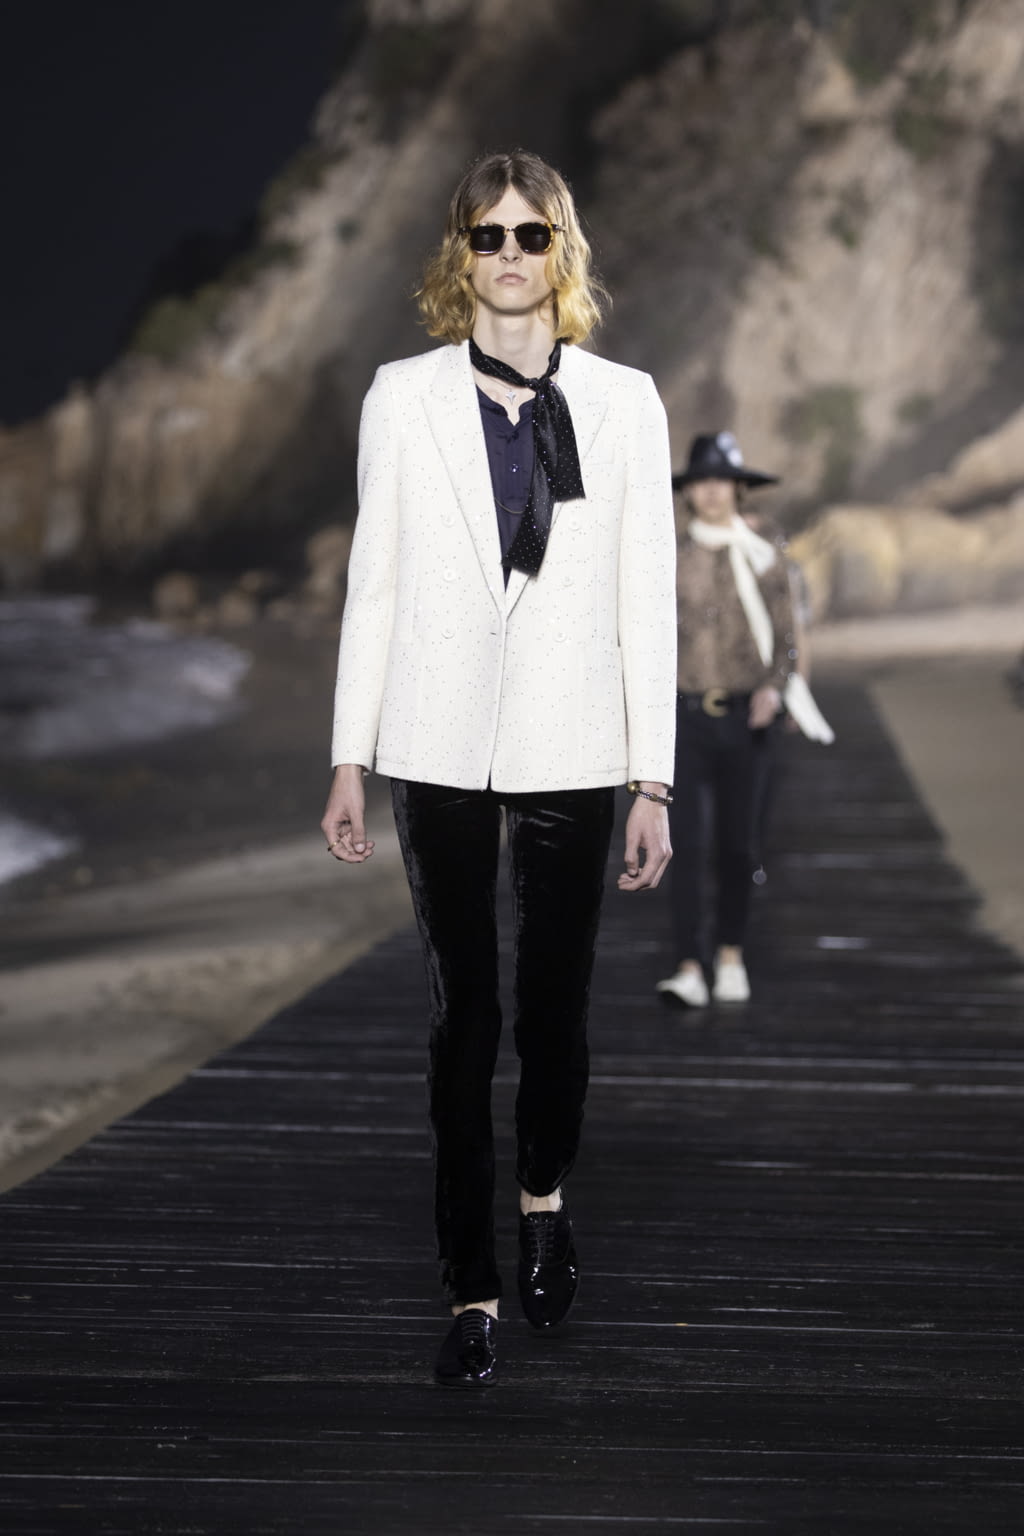 Saint Laurent SS20 menswear #32 - Tagwalk: The Fashion Search Engine